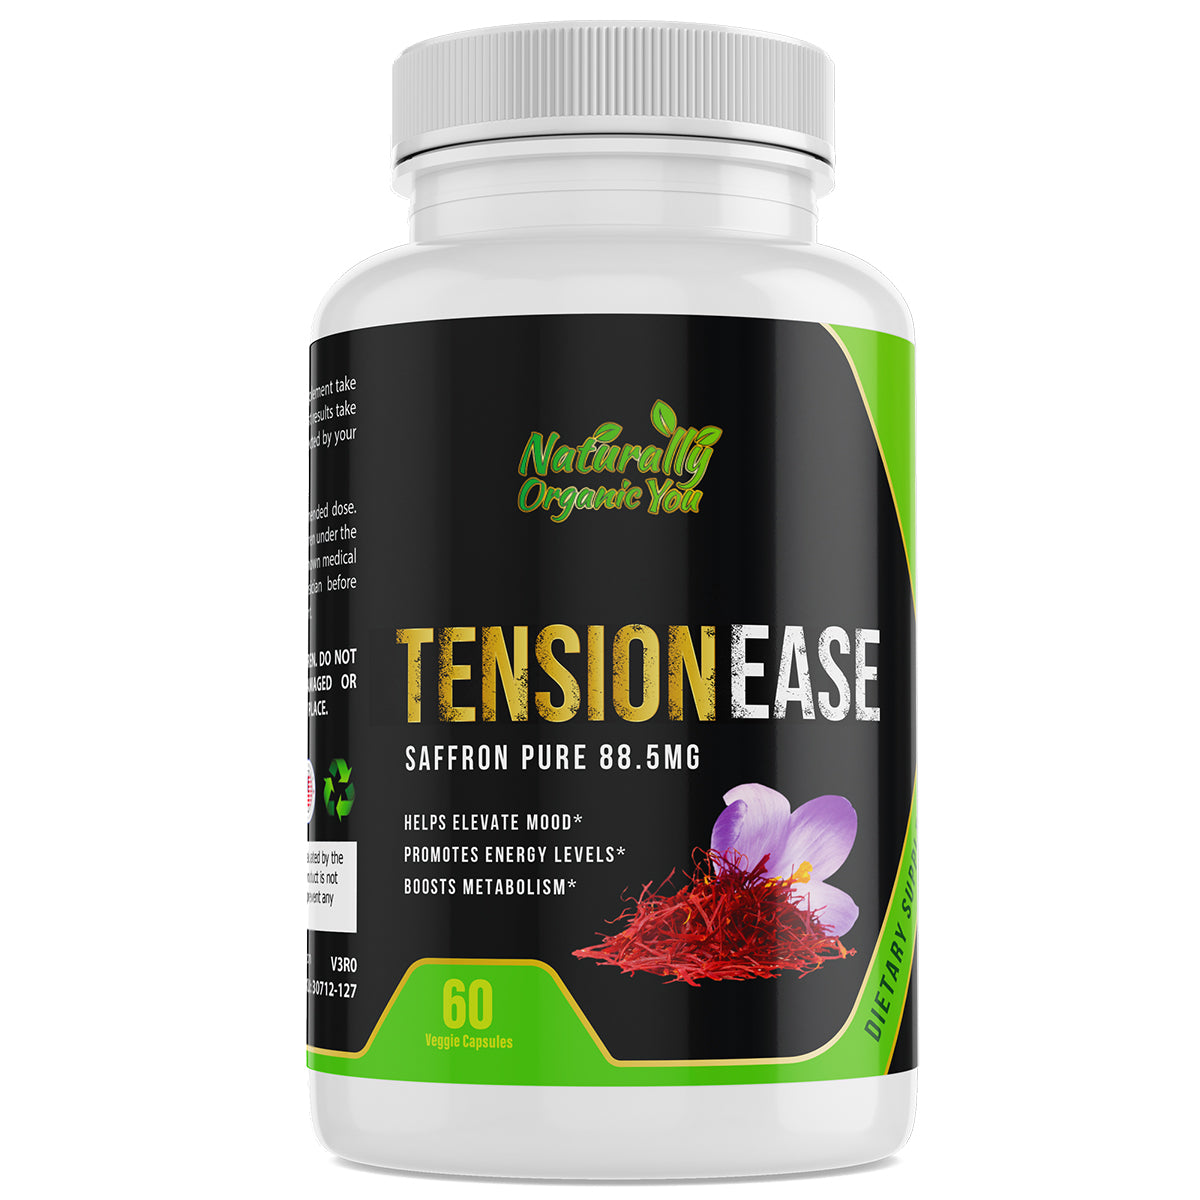 TENSION EASE (Saffron Pure 88.5mg)